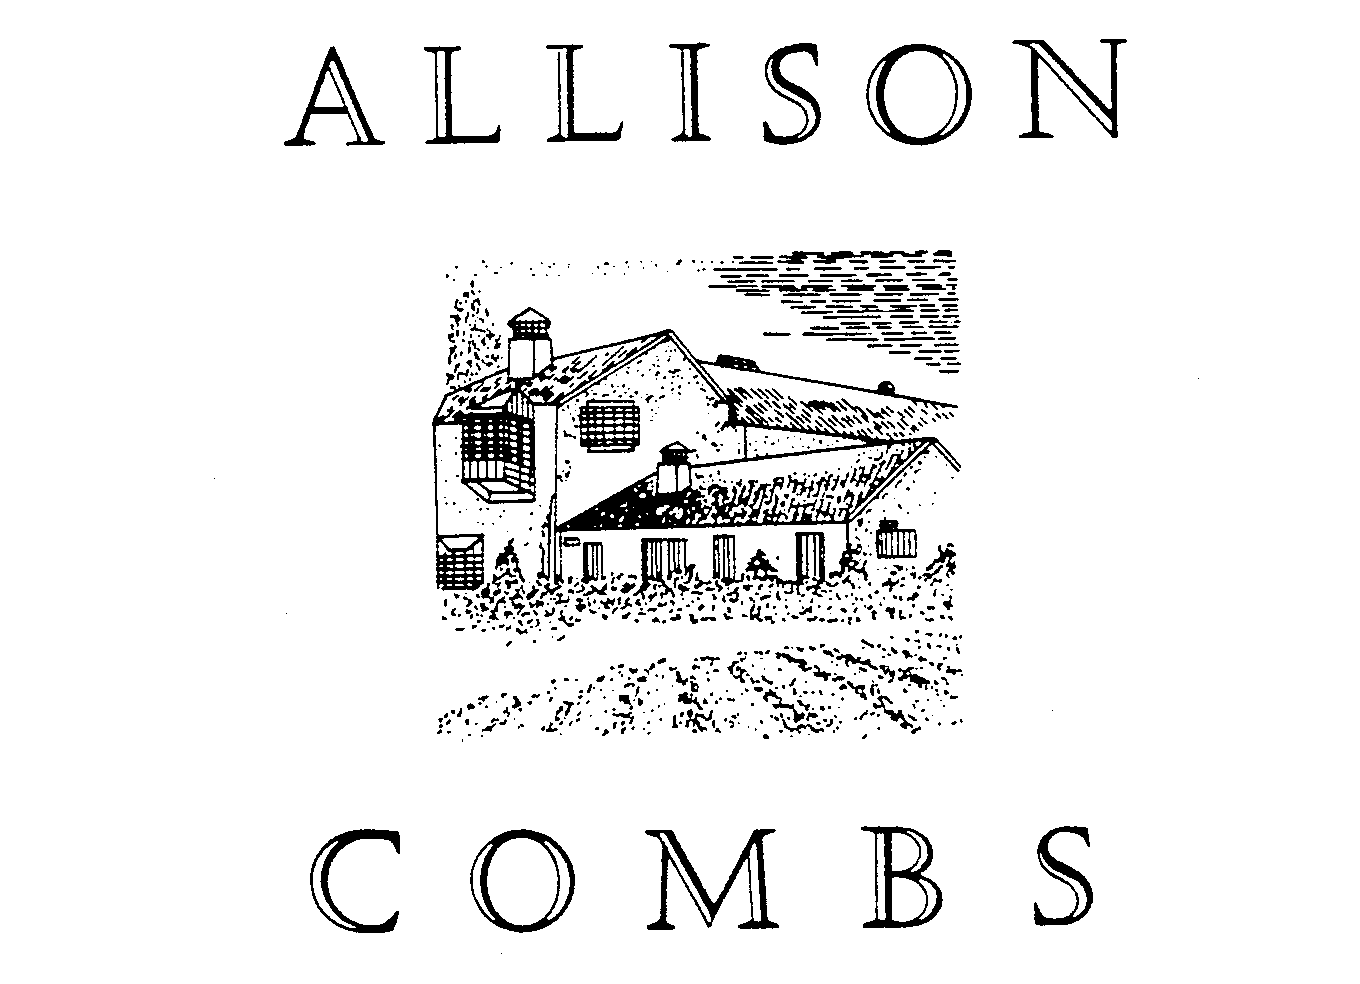 ALLISON COMBS